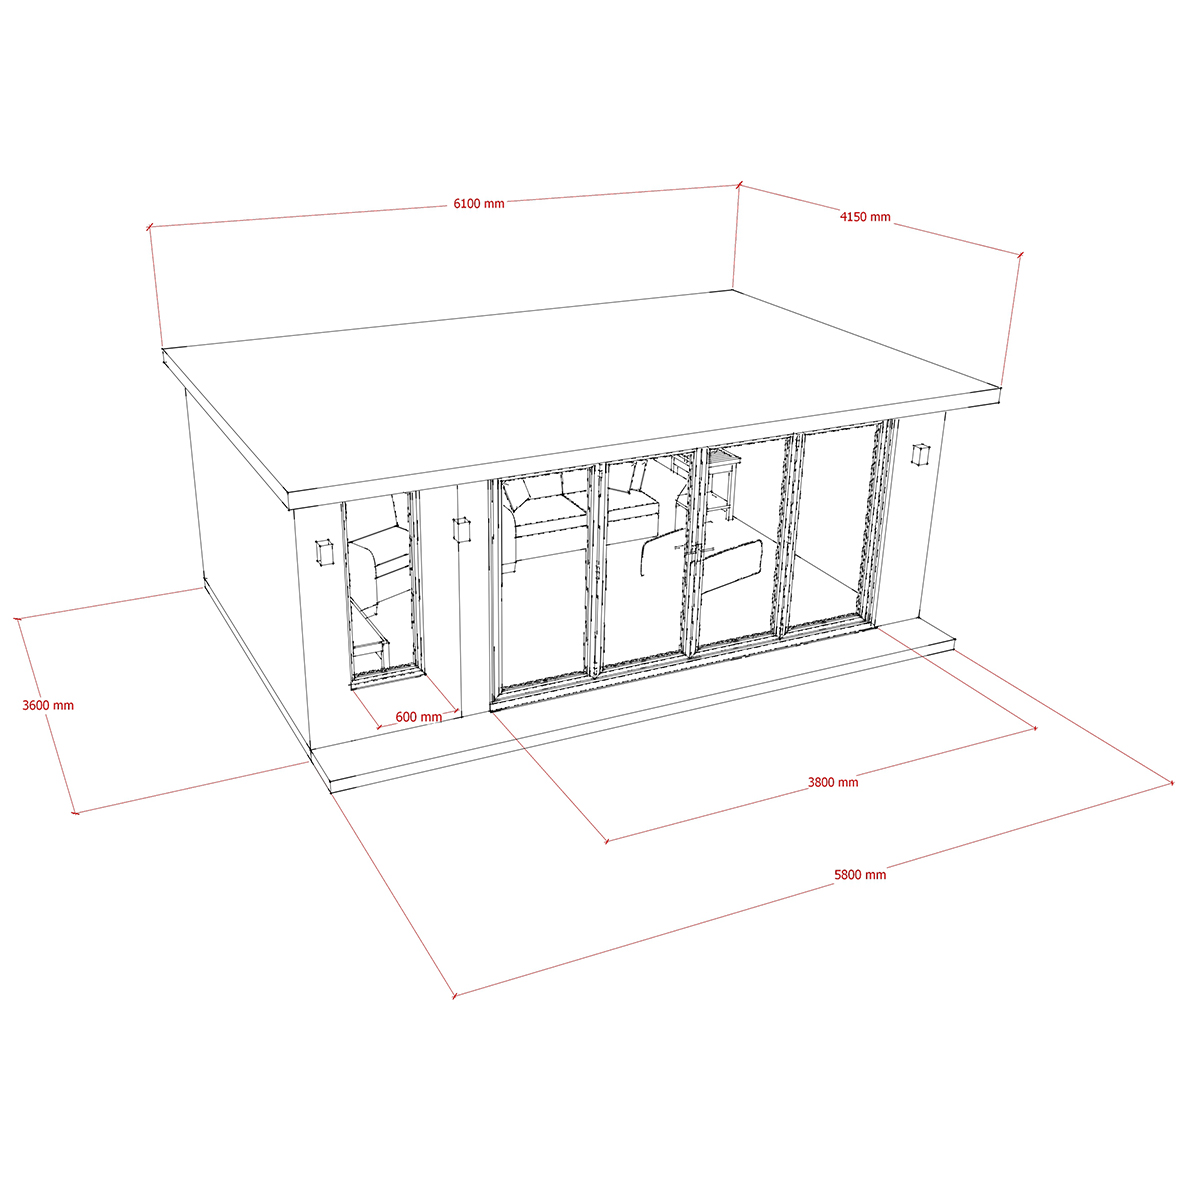 Exterior dimensions for designer garden room